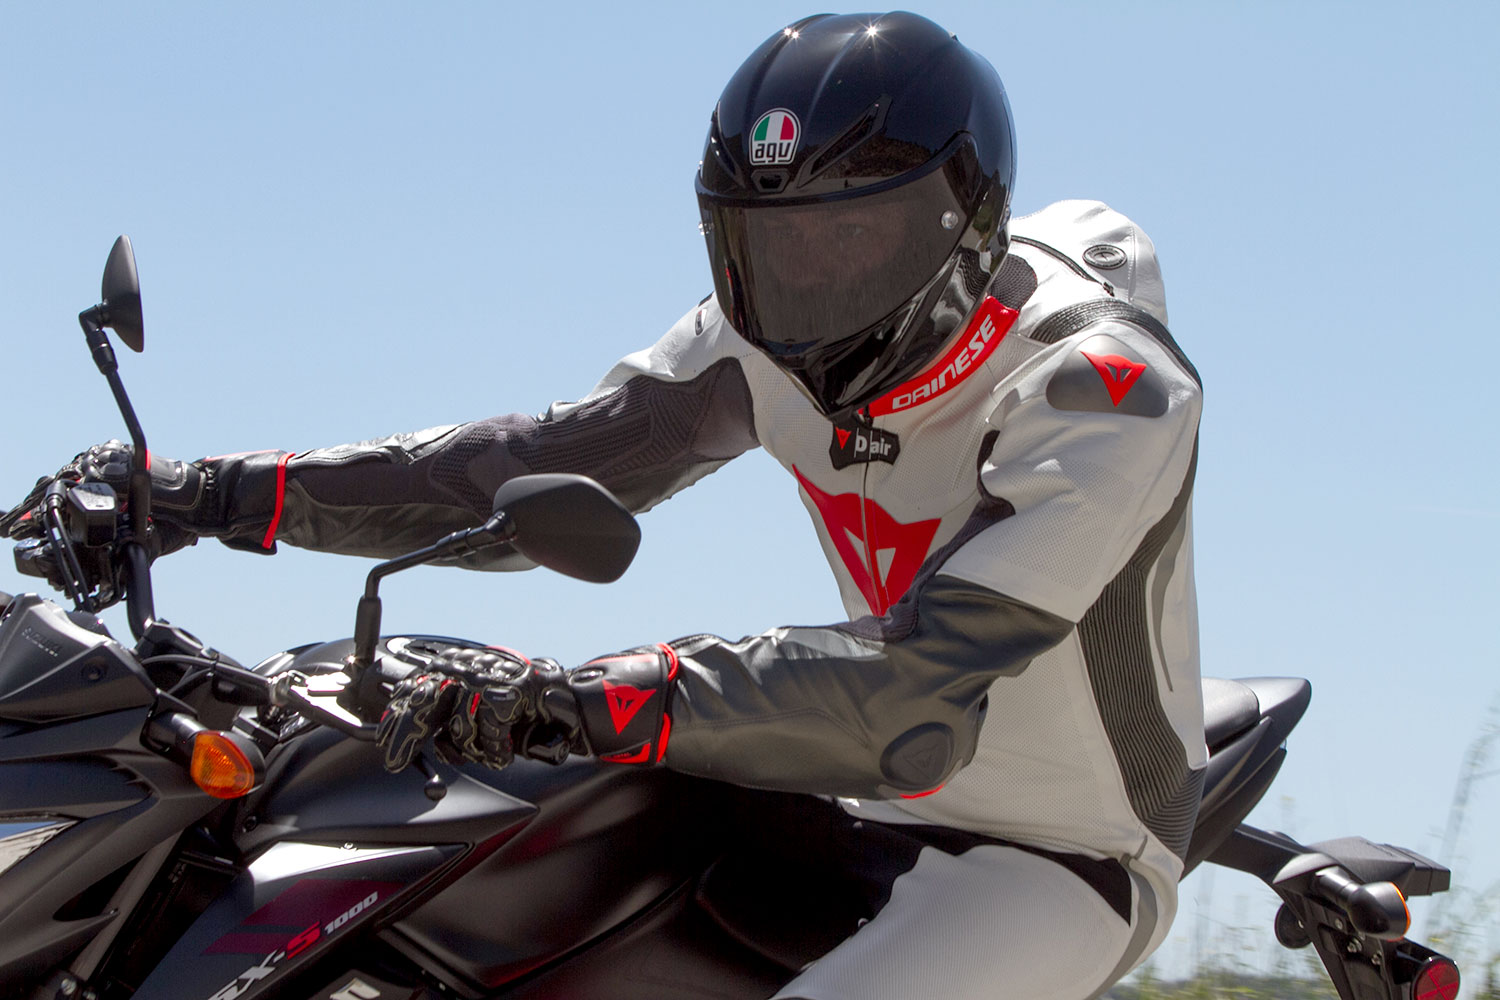 Dainese Custom Works motorcycle suit